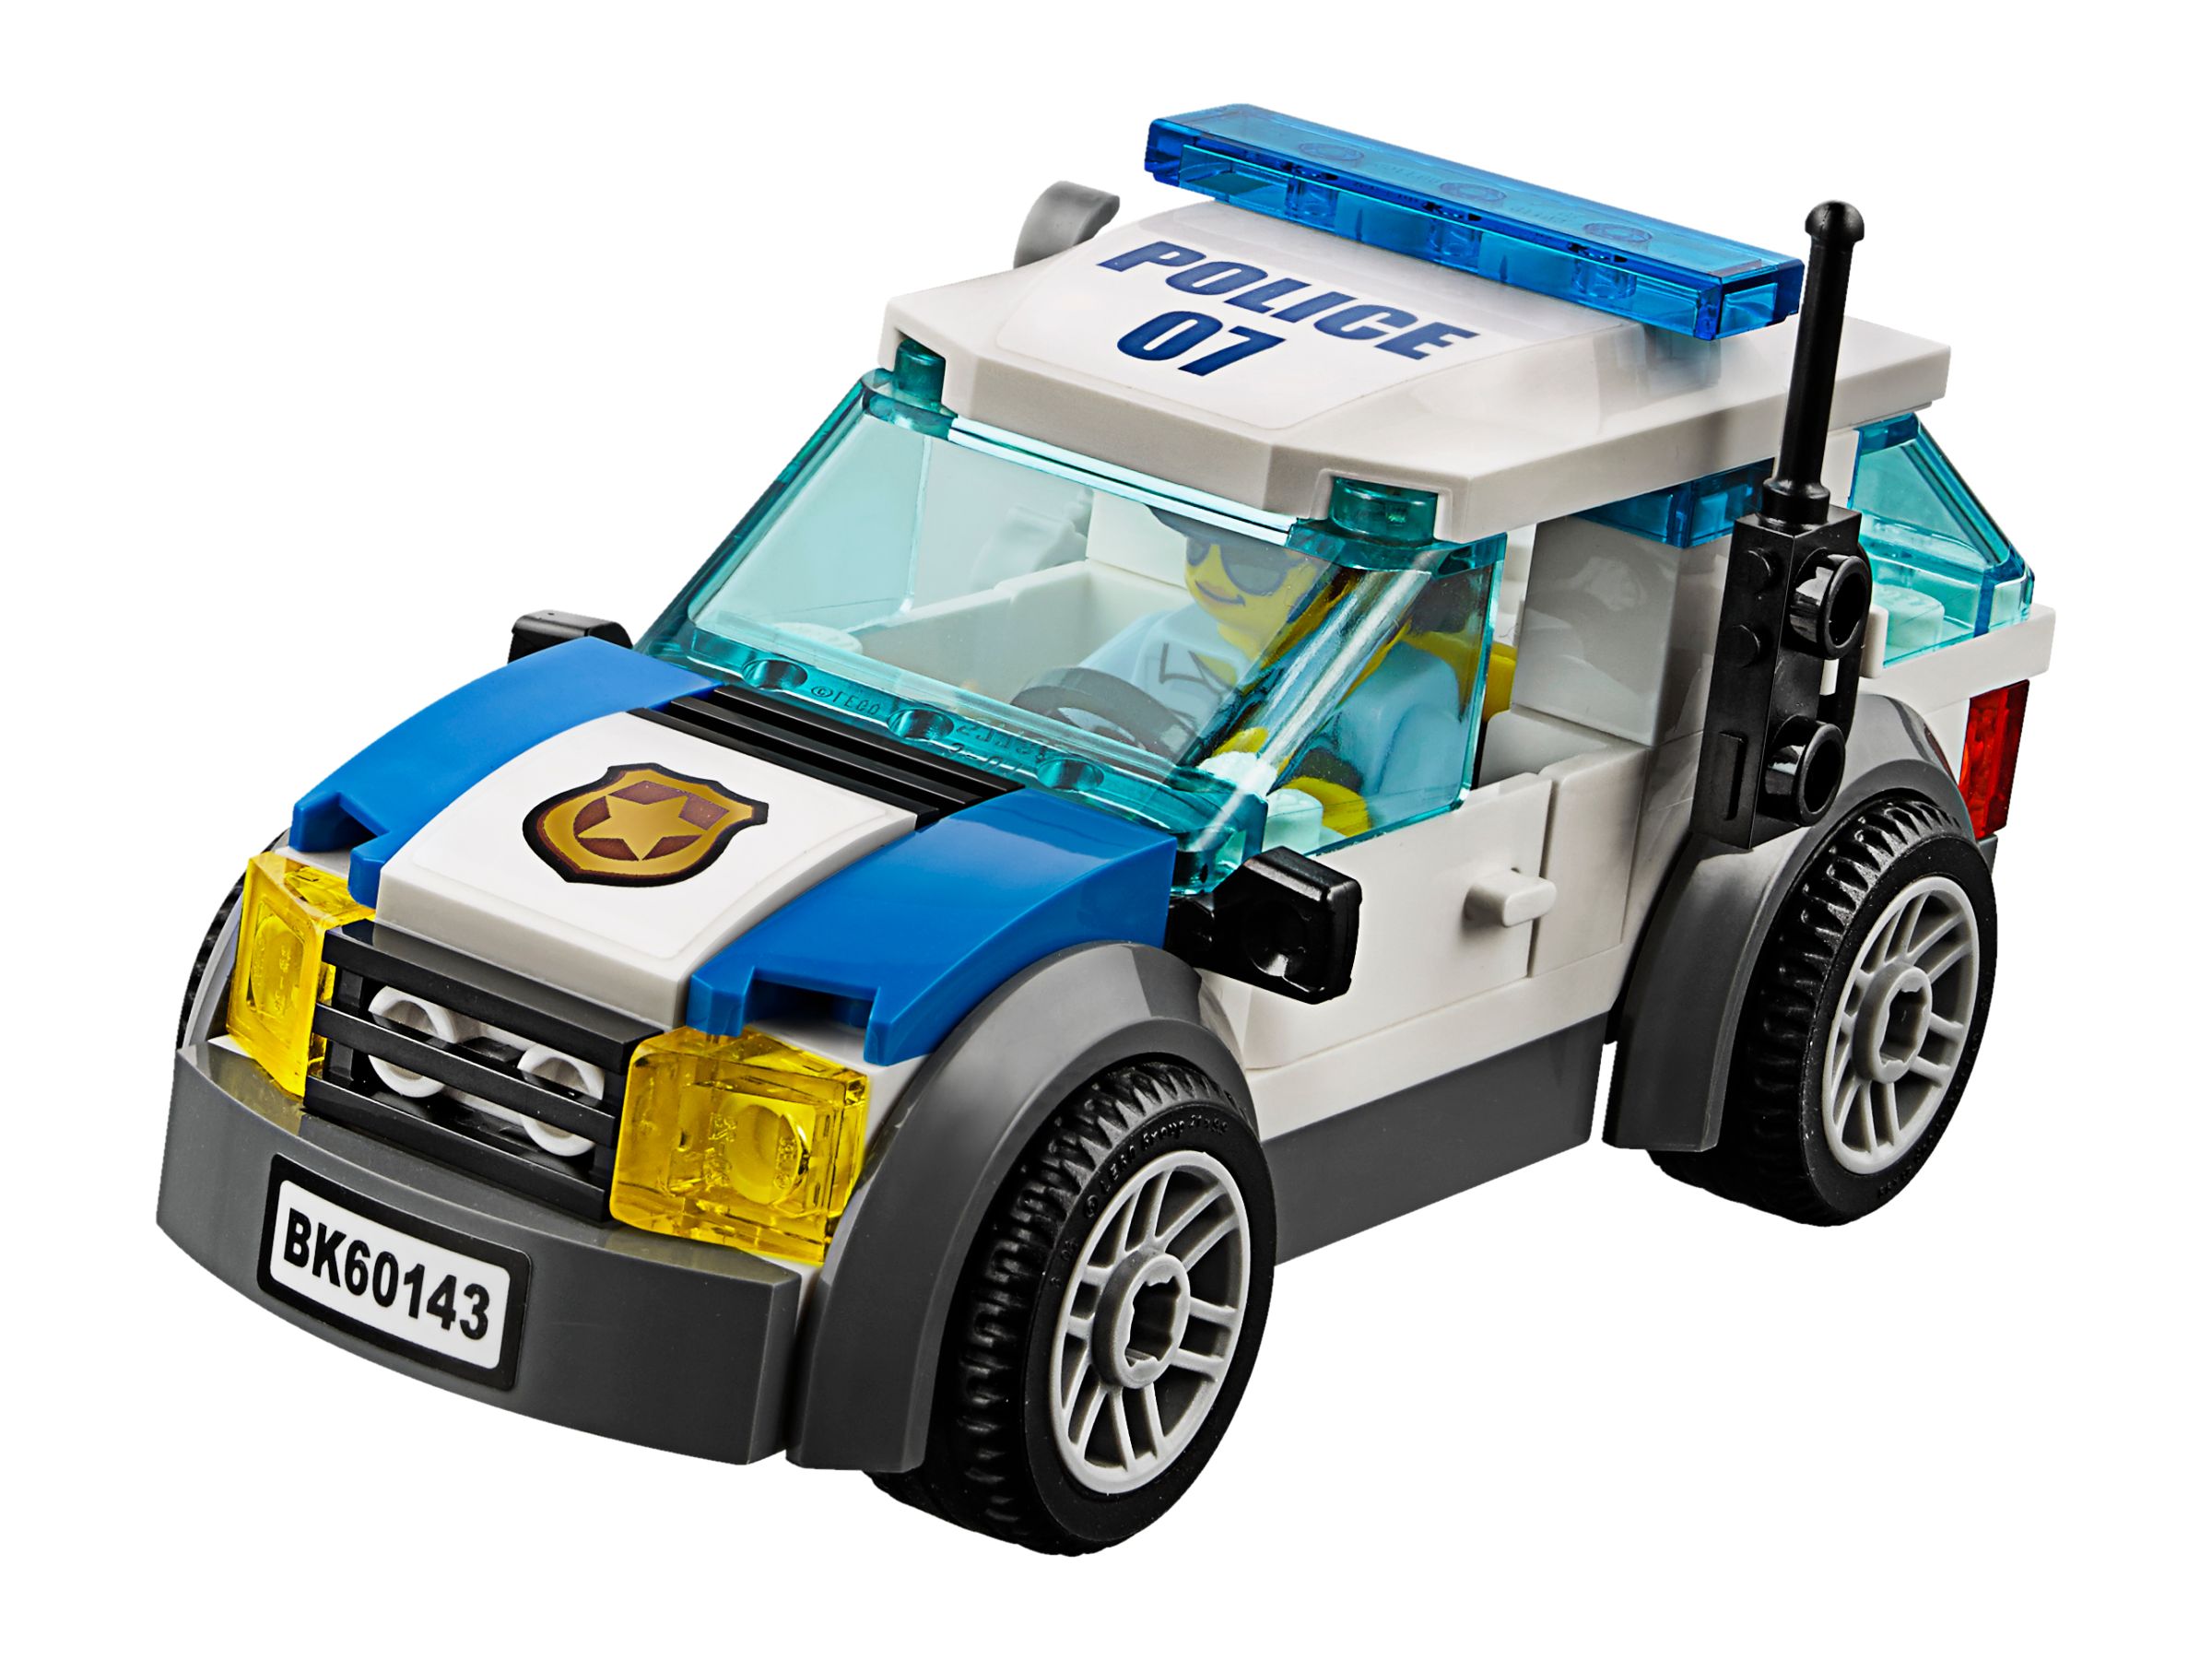 LEGO City 60143 Überfall auf Autotransporter LEGO_60143_alt5.jpg